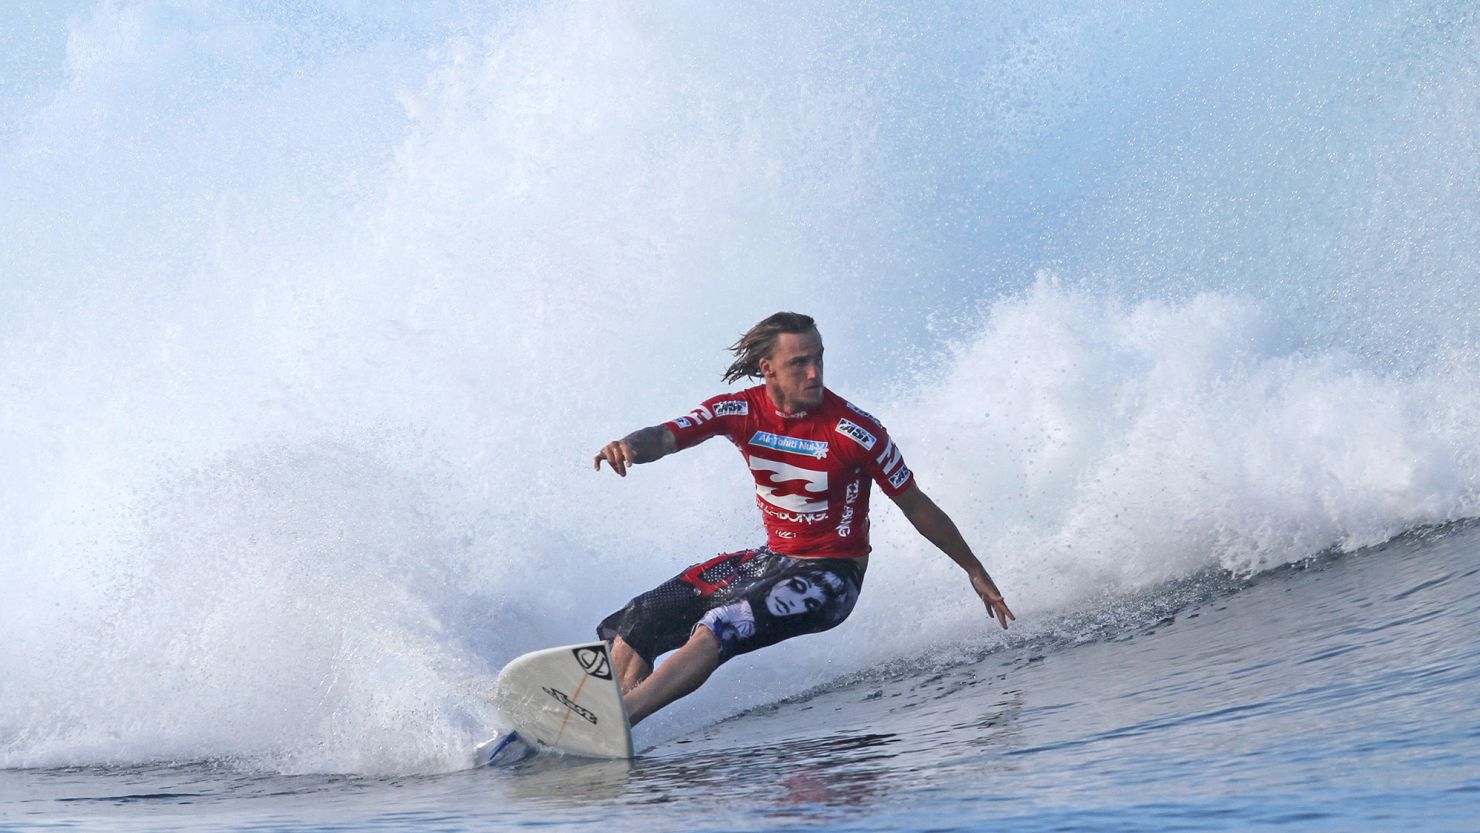 Chris Davidson Former Australian Surfer Dies After Being Punched Outside Pub Cnn